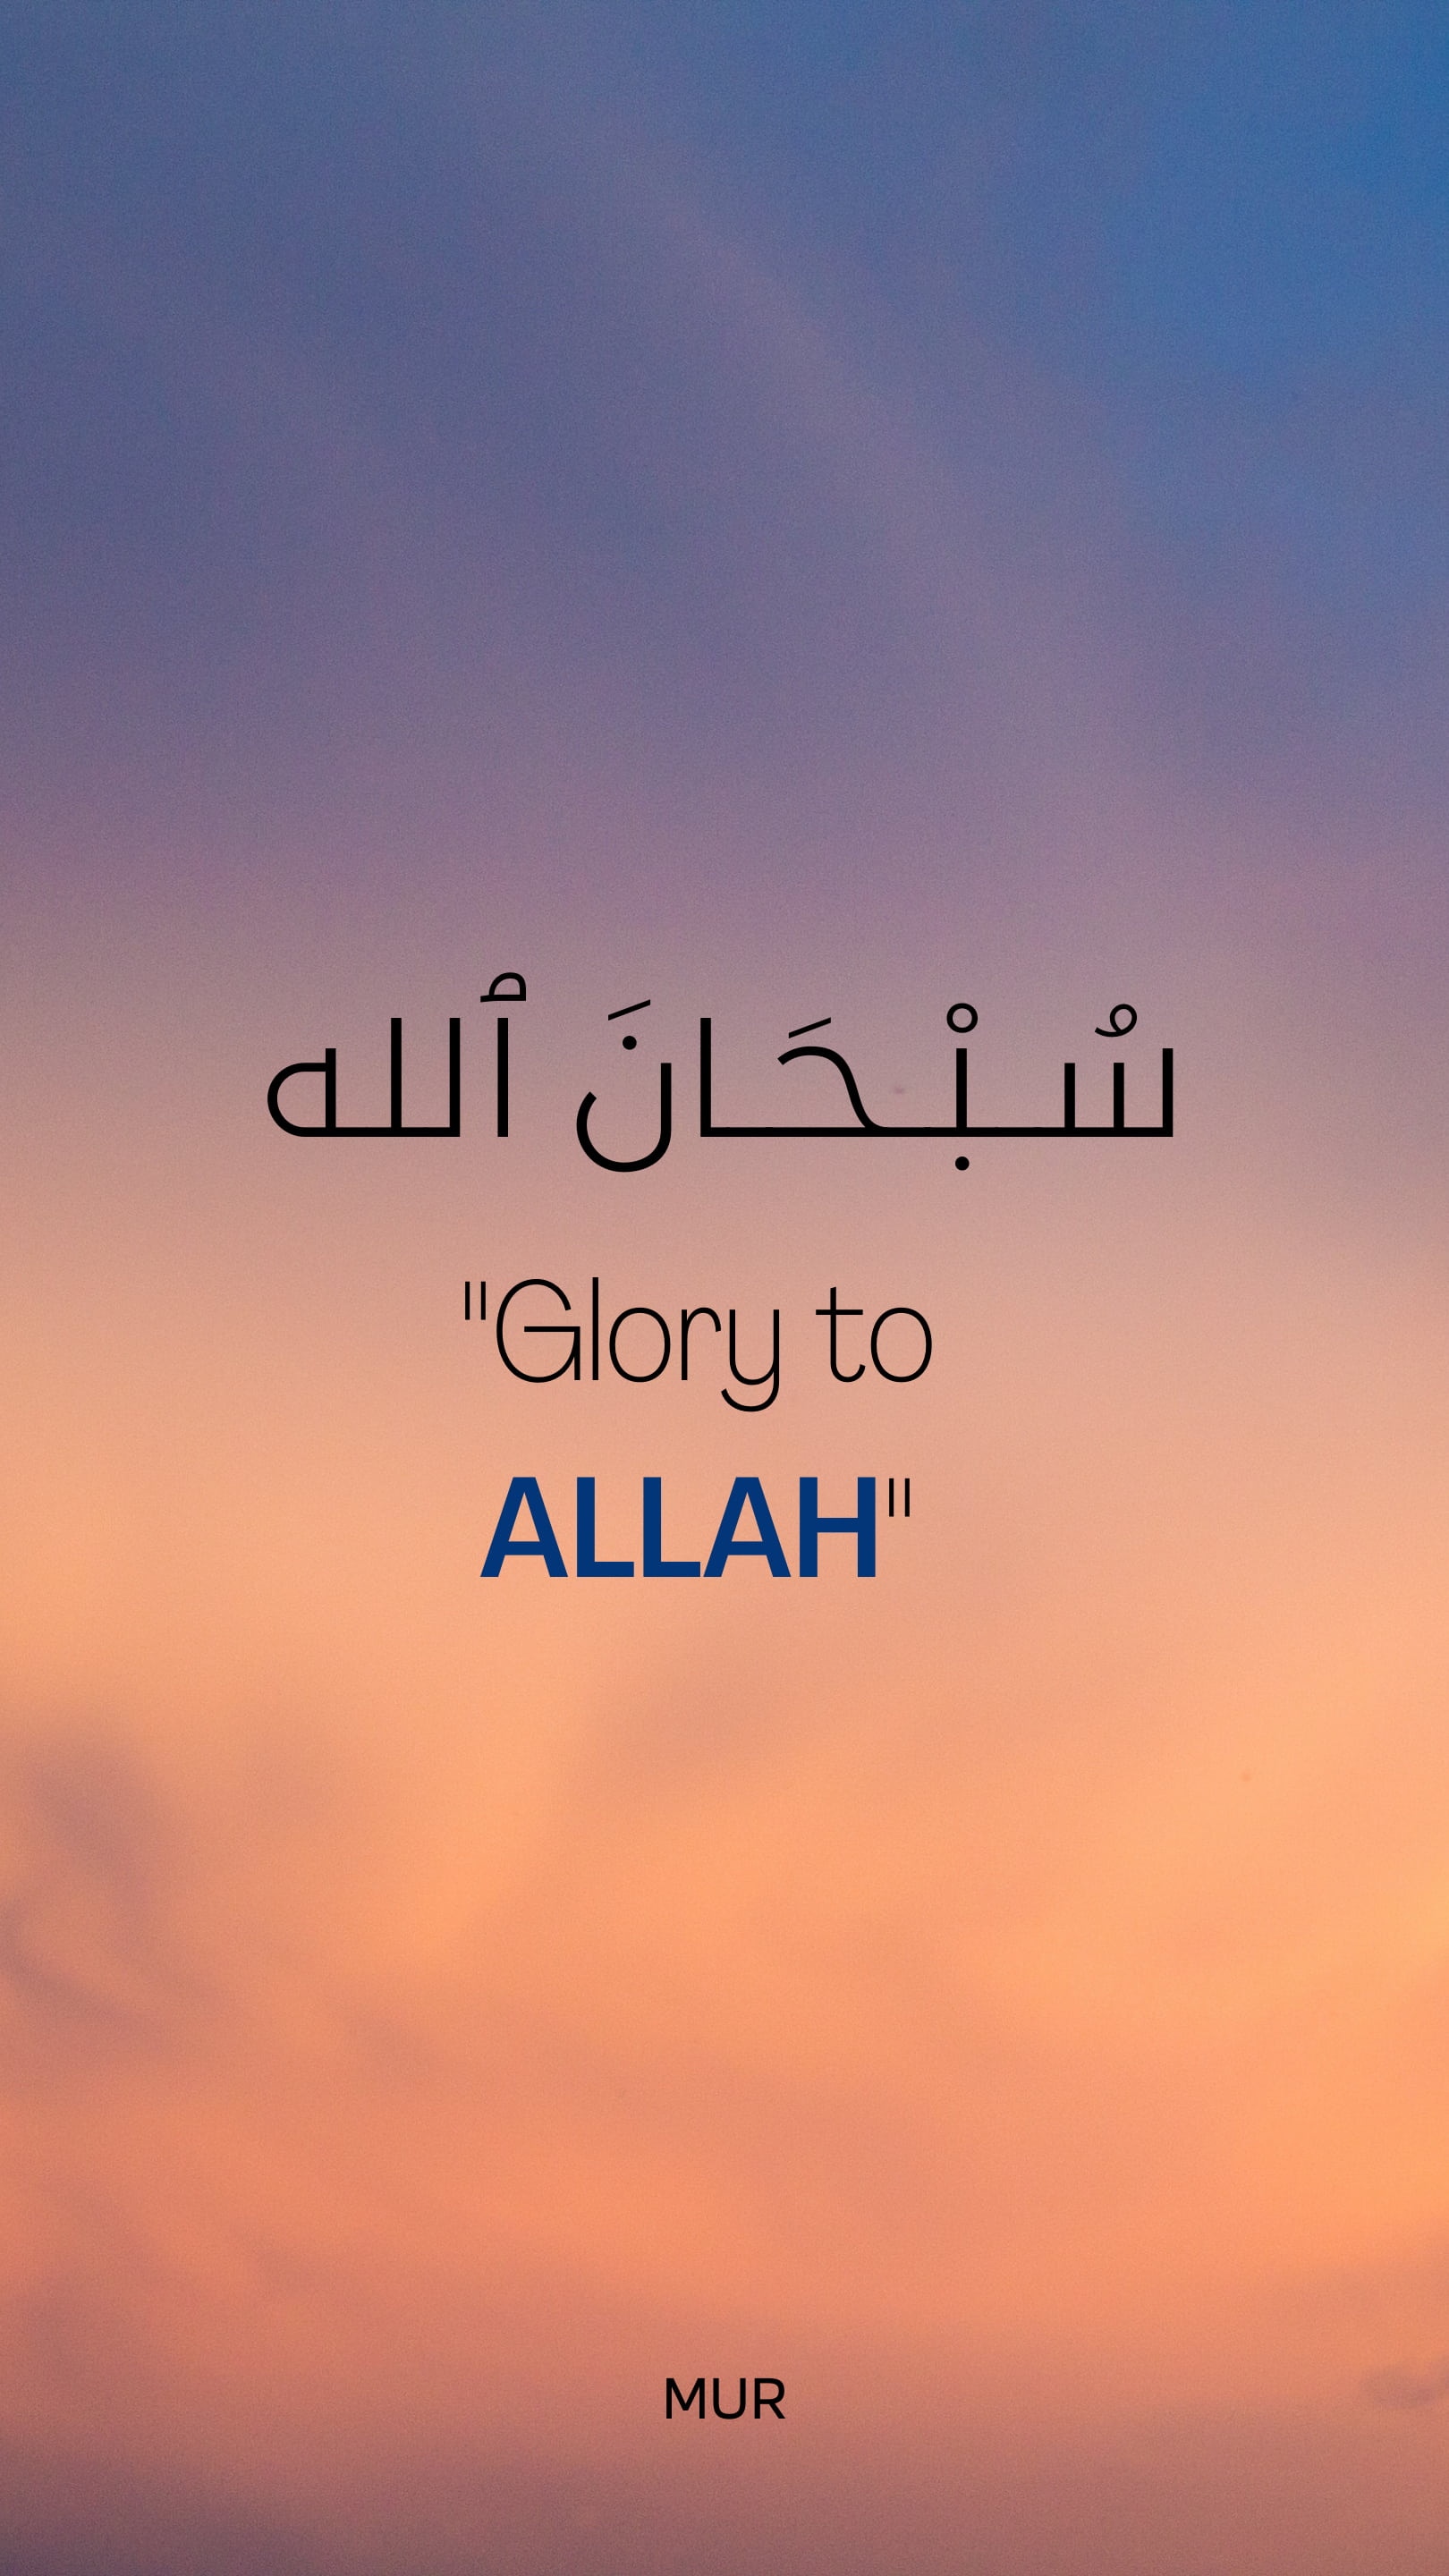 Subhanallah - glory to allah